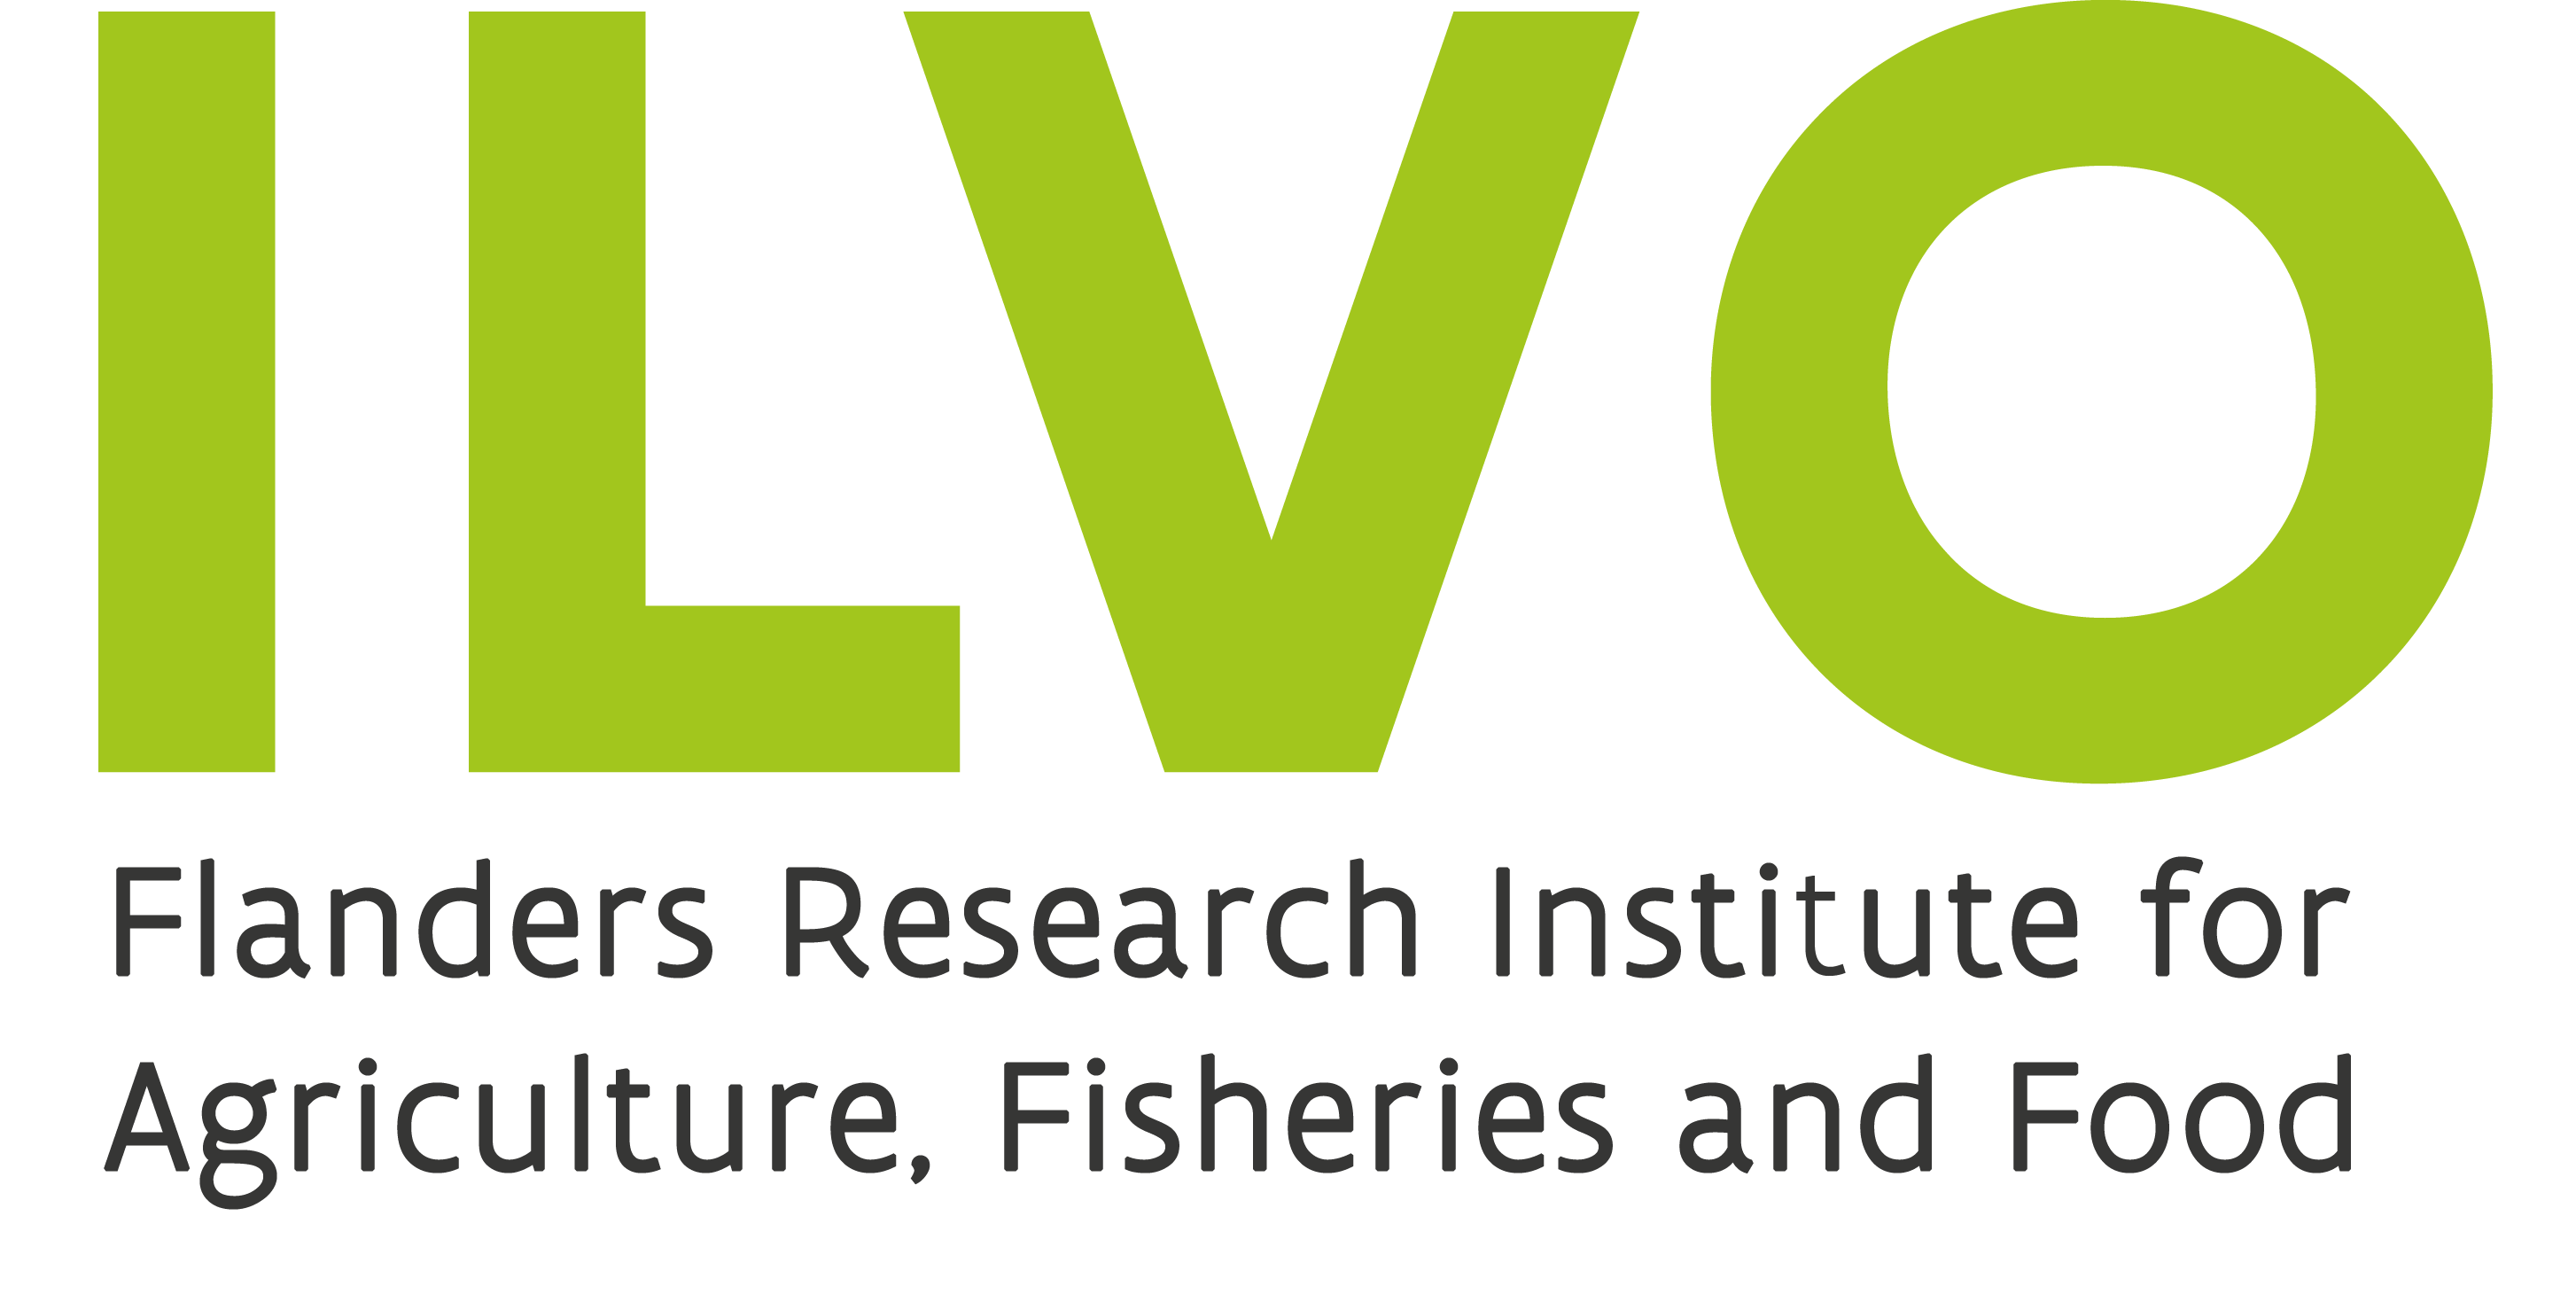 ringbio aflatoxin M1 rapid test kit is validated by ILVO